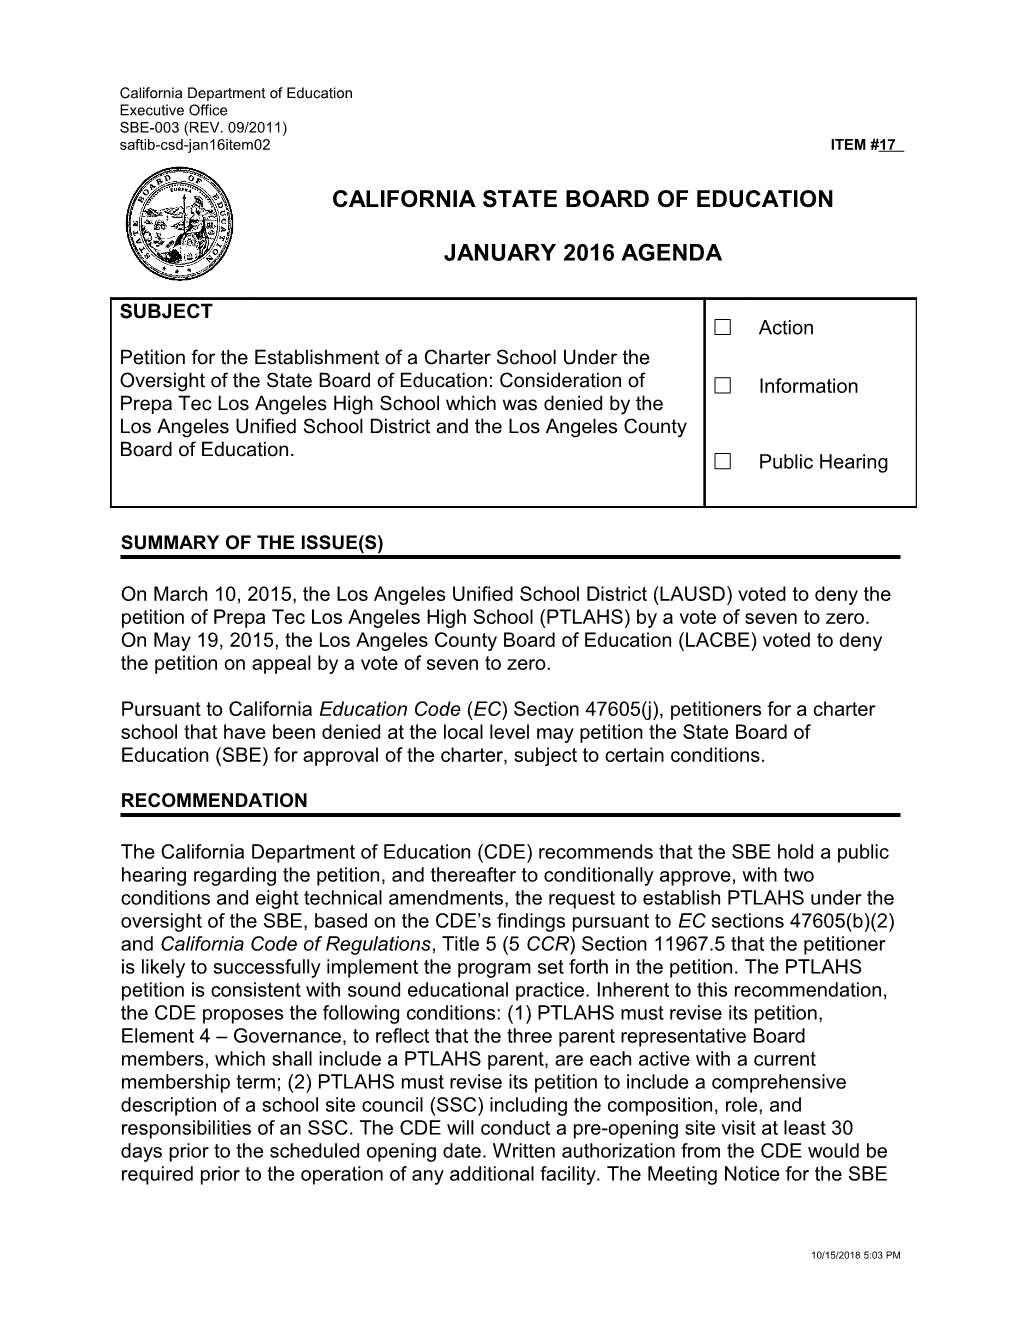 January 2016 Agenda Item 17 - Meeting Agendas (CA State Board of Education)